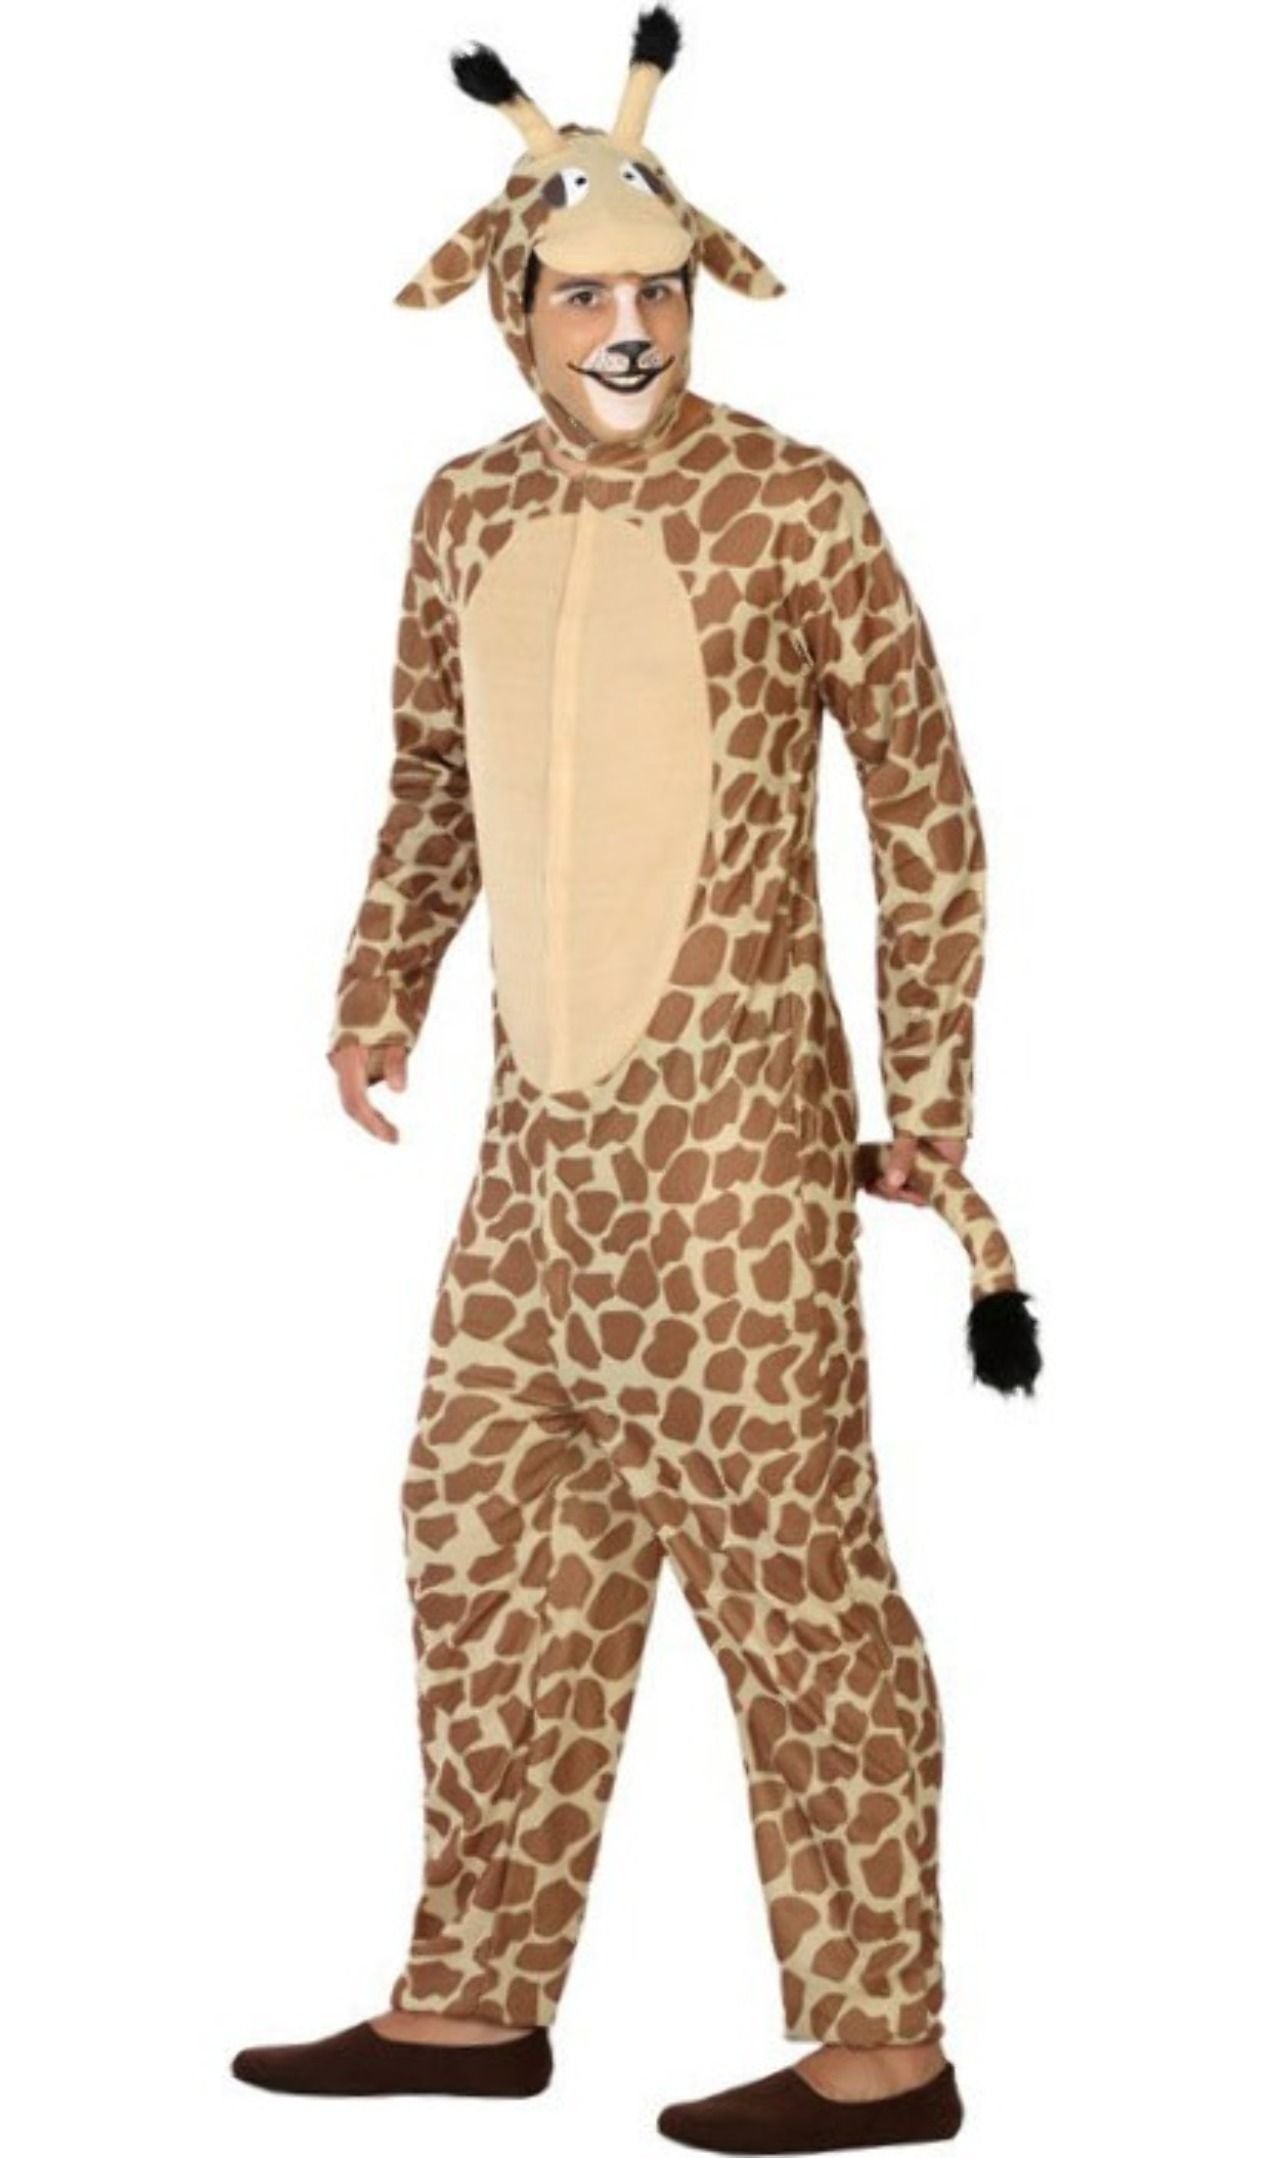 Acquista: Costumi di gruppo da Giraffa